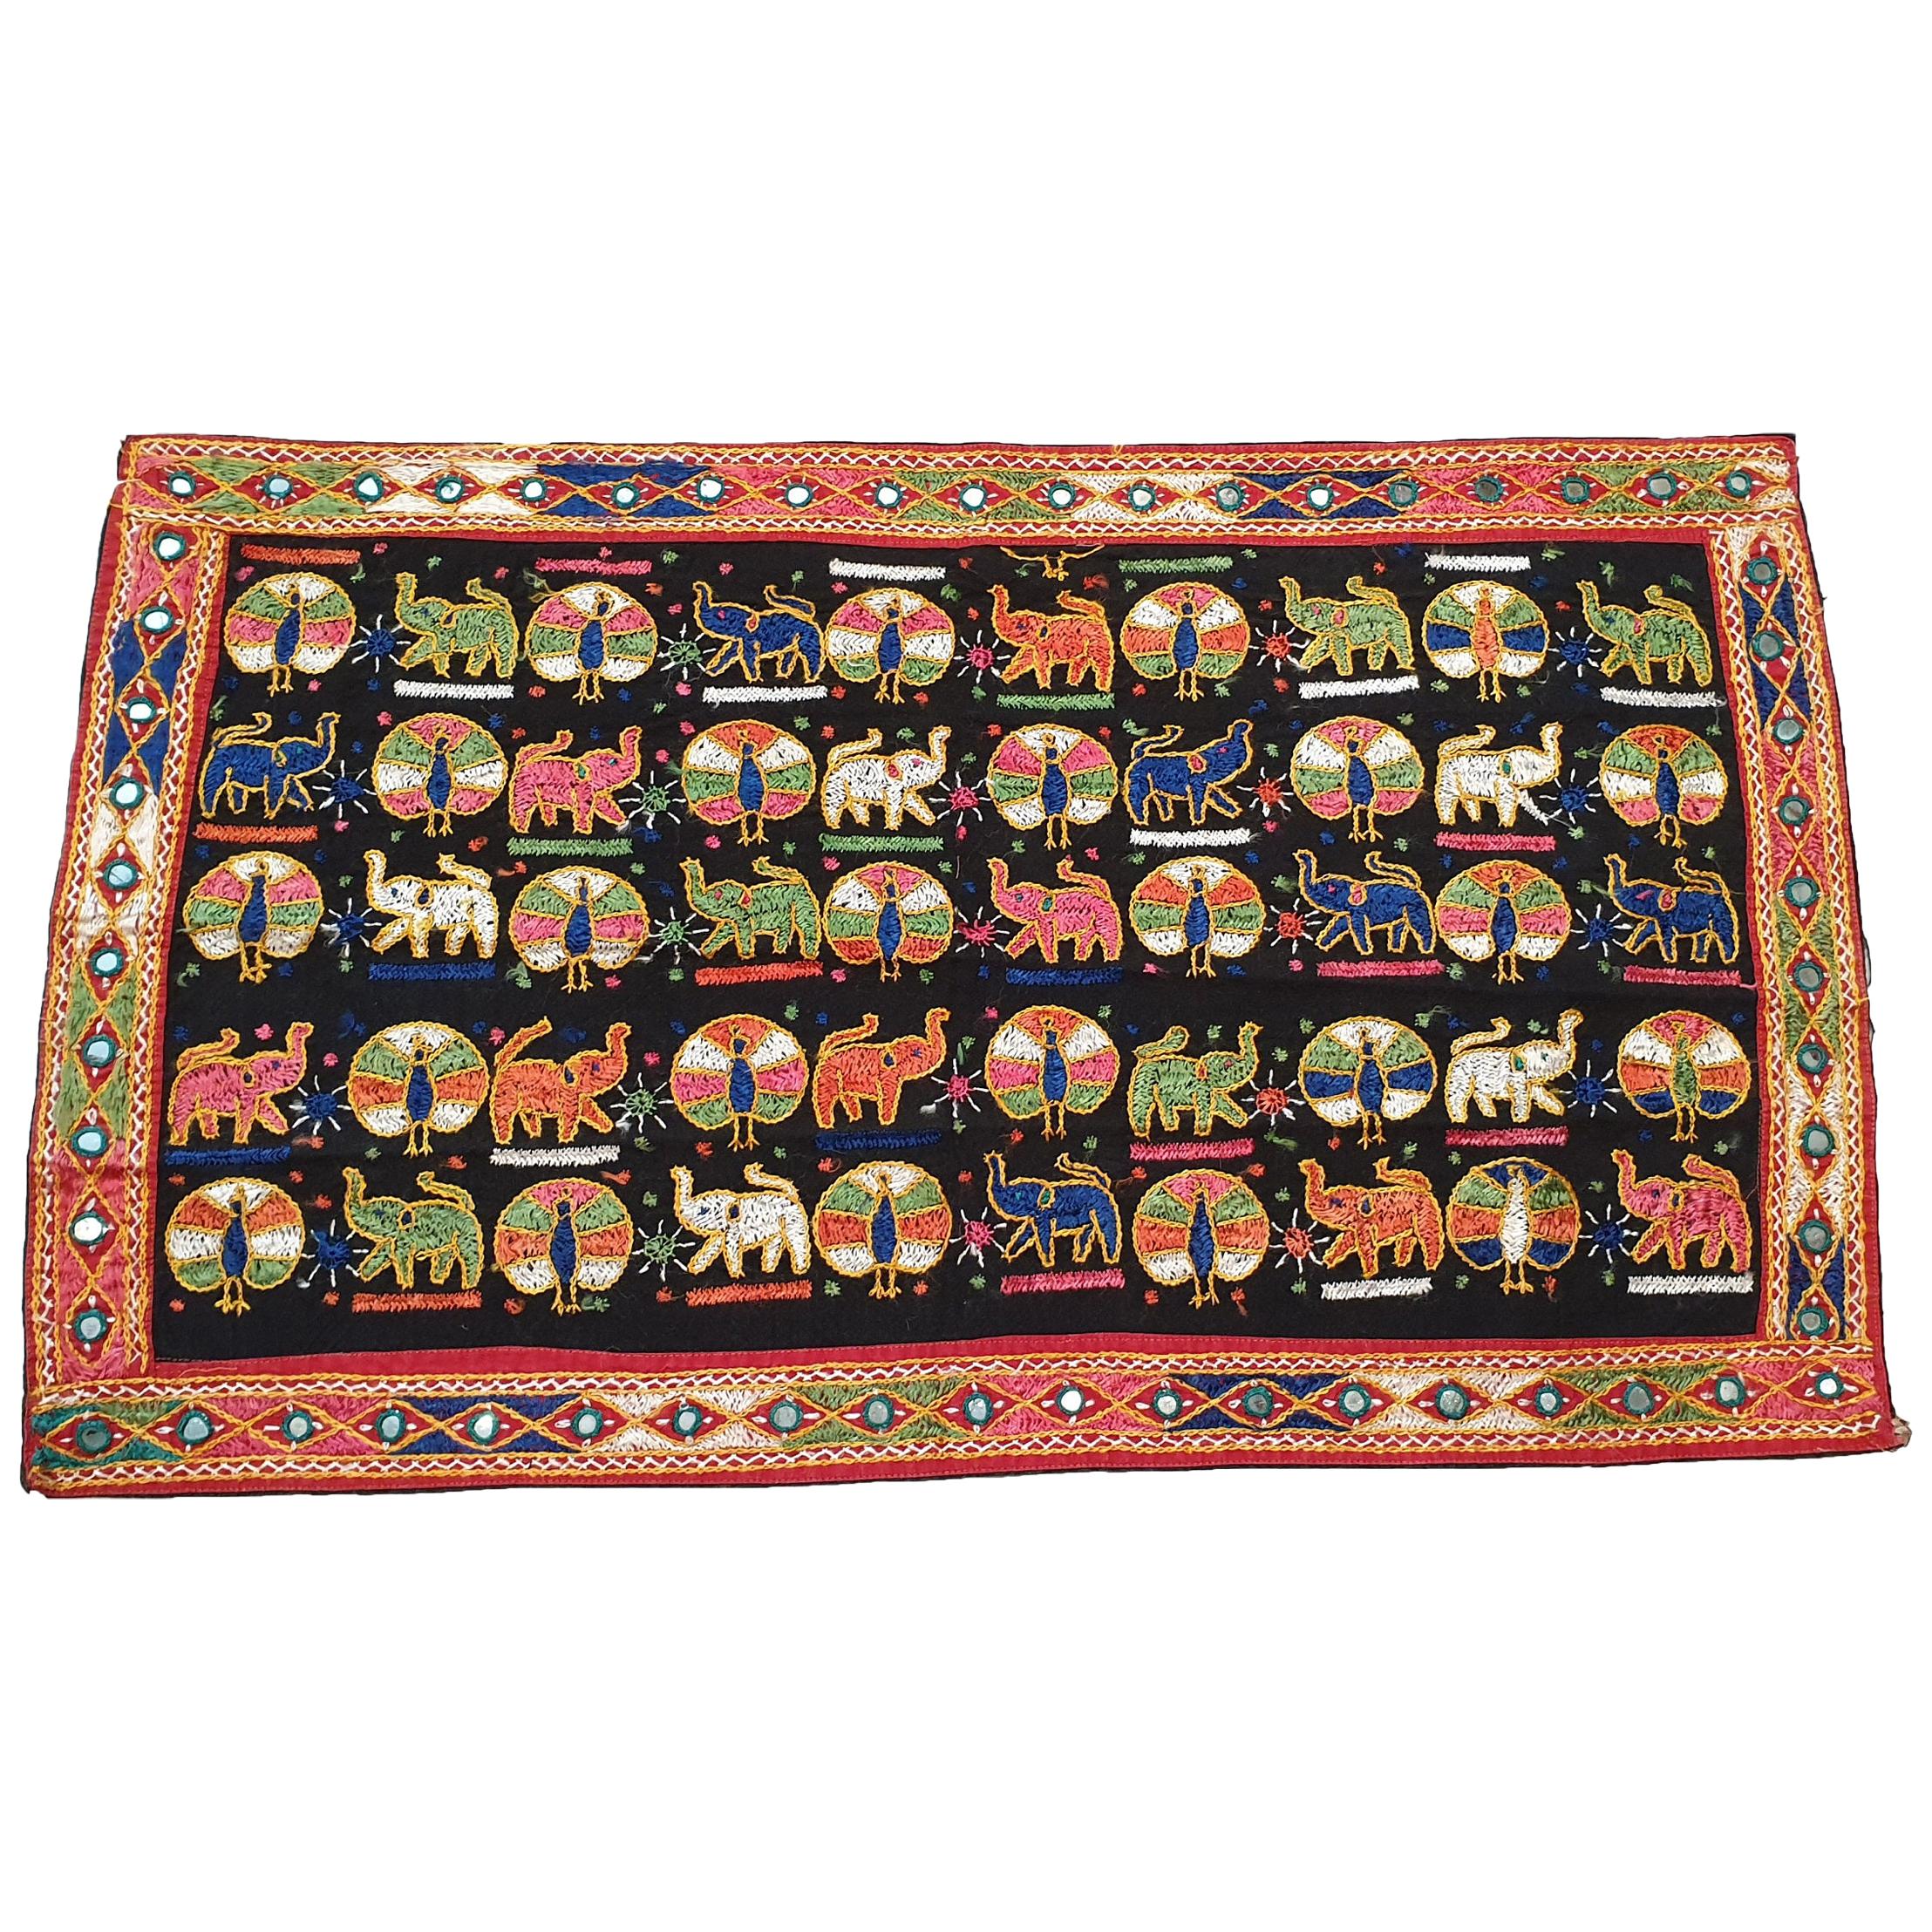 720 - 20th Century Indian Textile